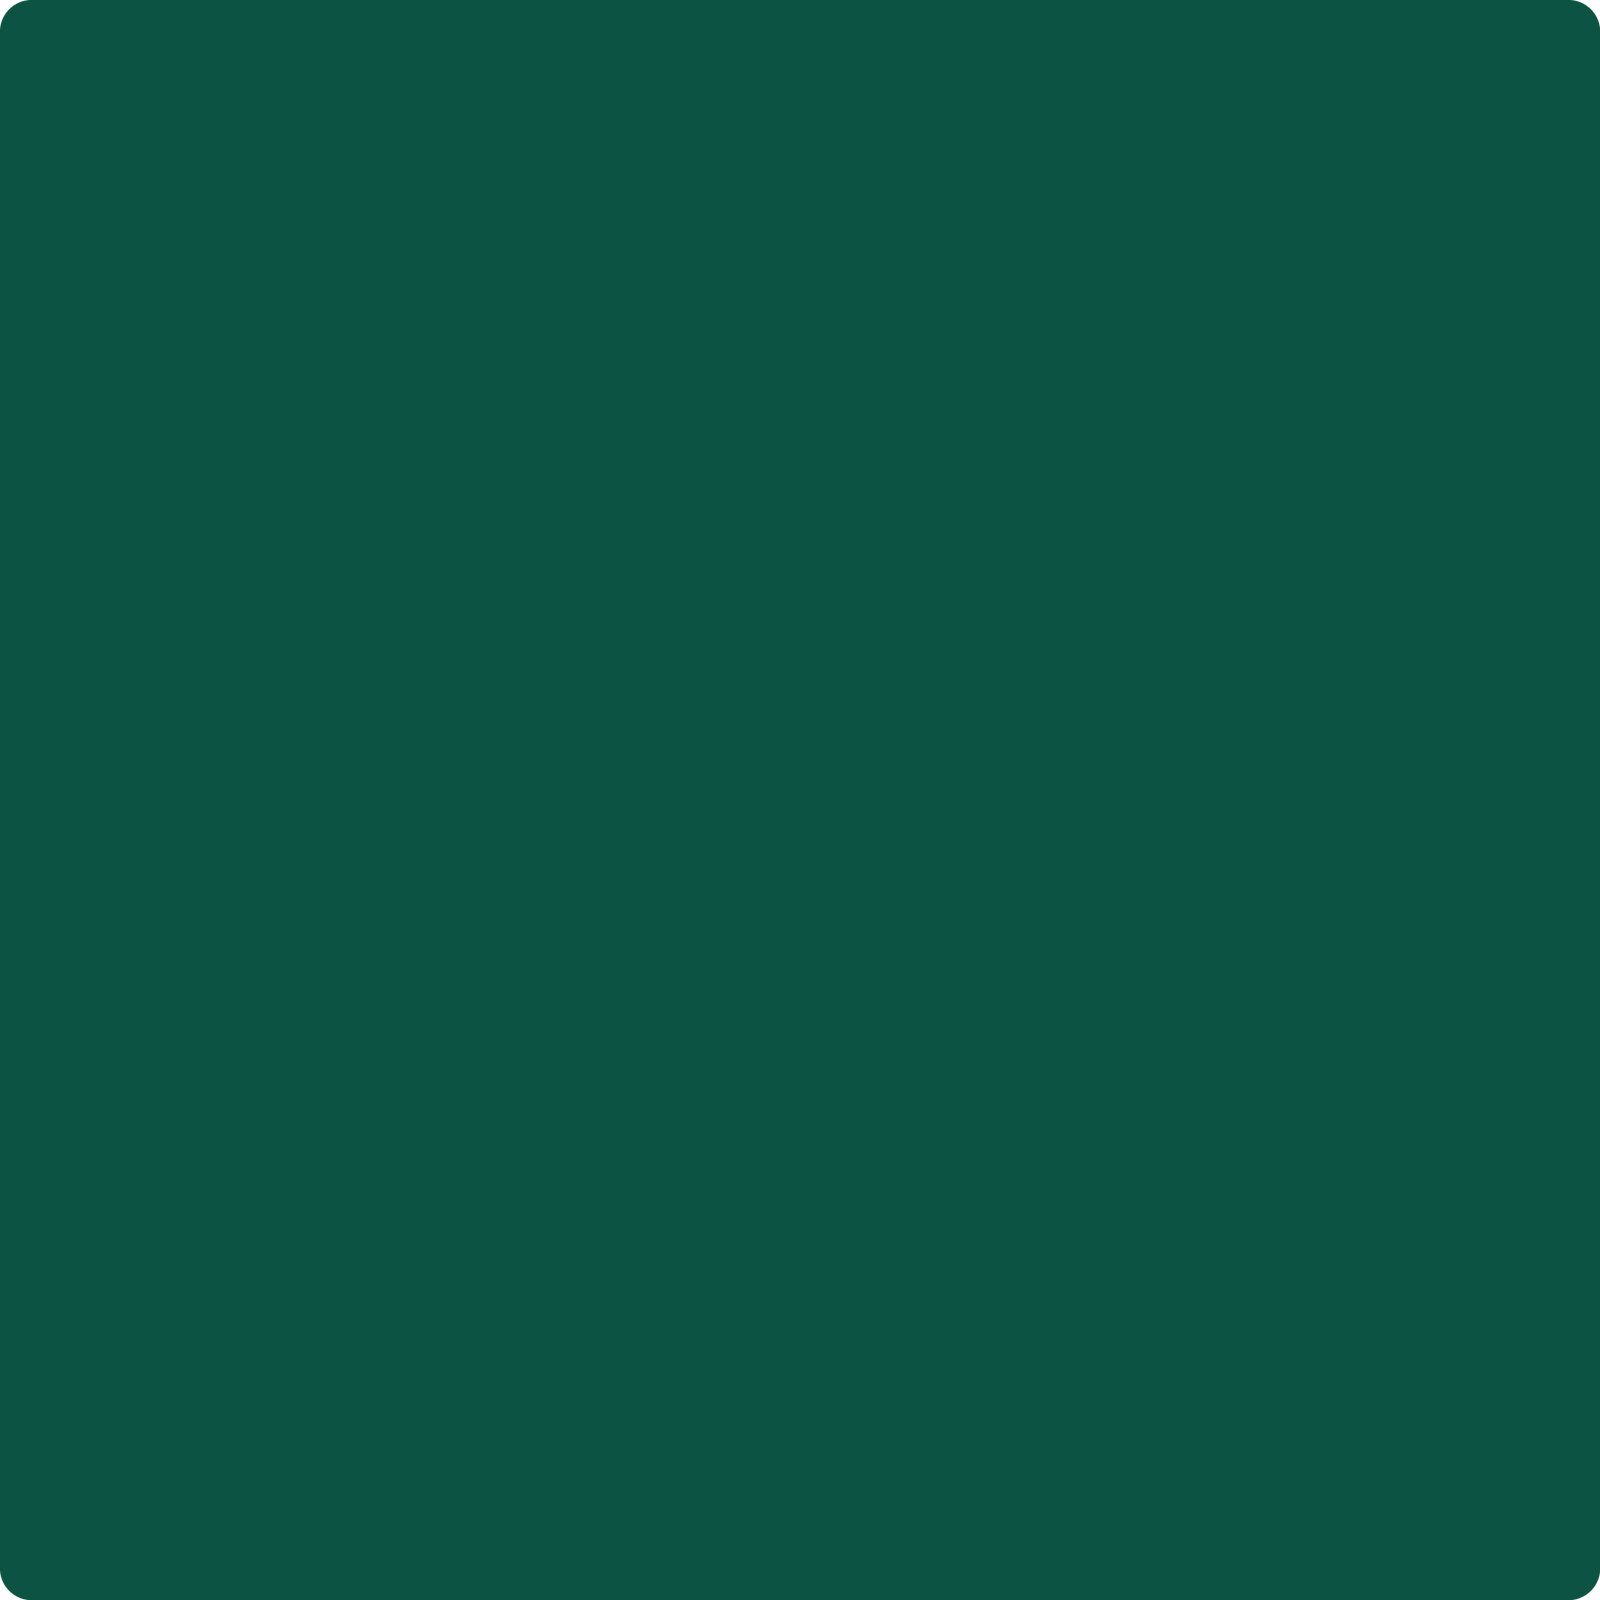 Benjamin Moore Fatigue Green (2140-10) Paint coordinating colors